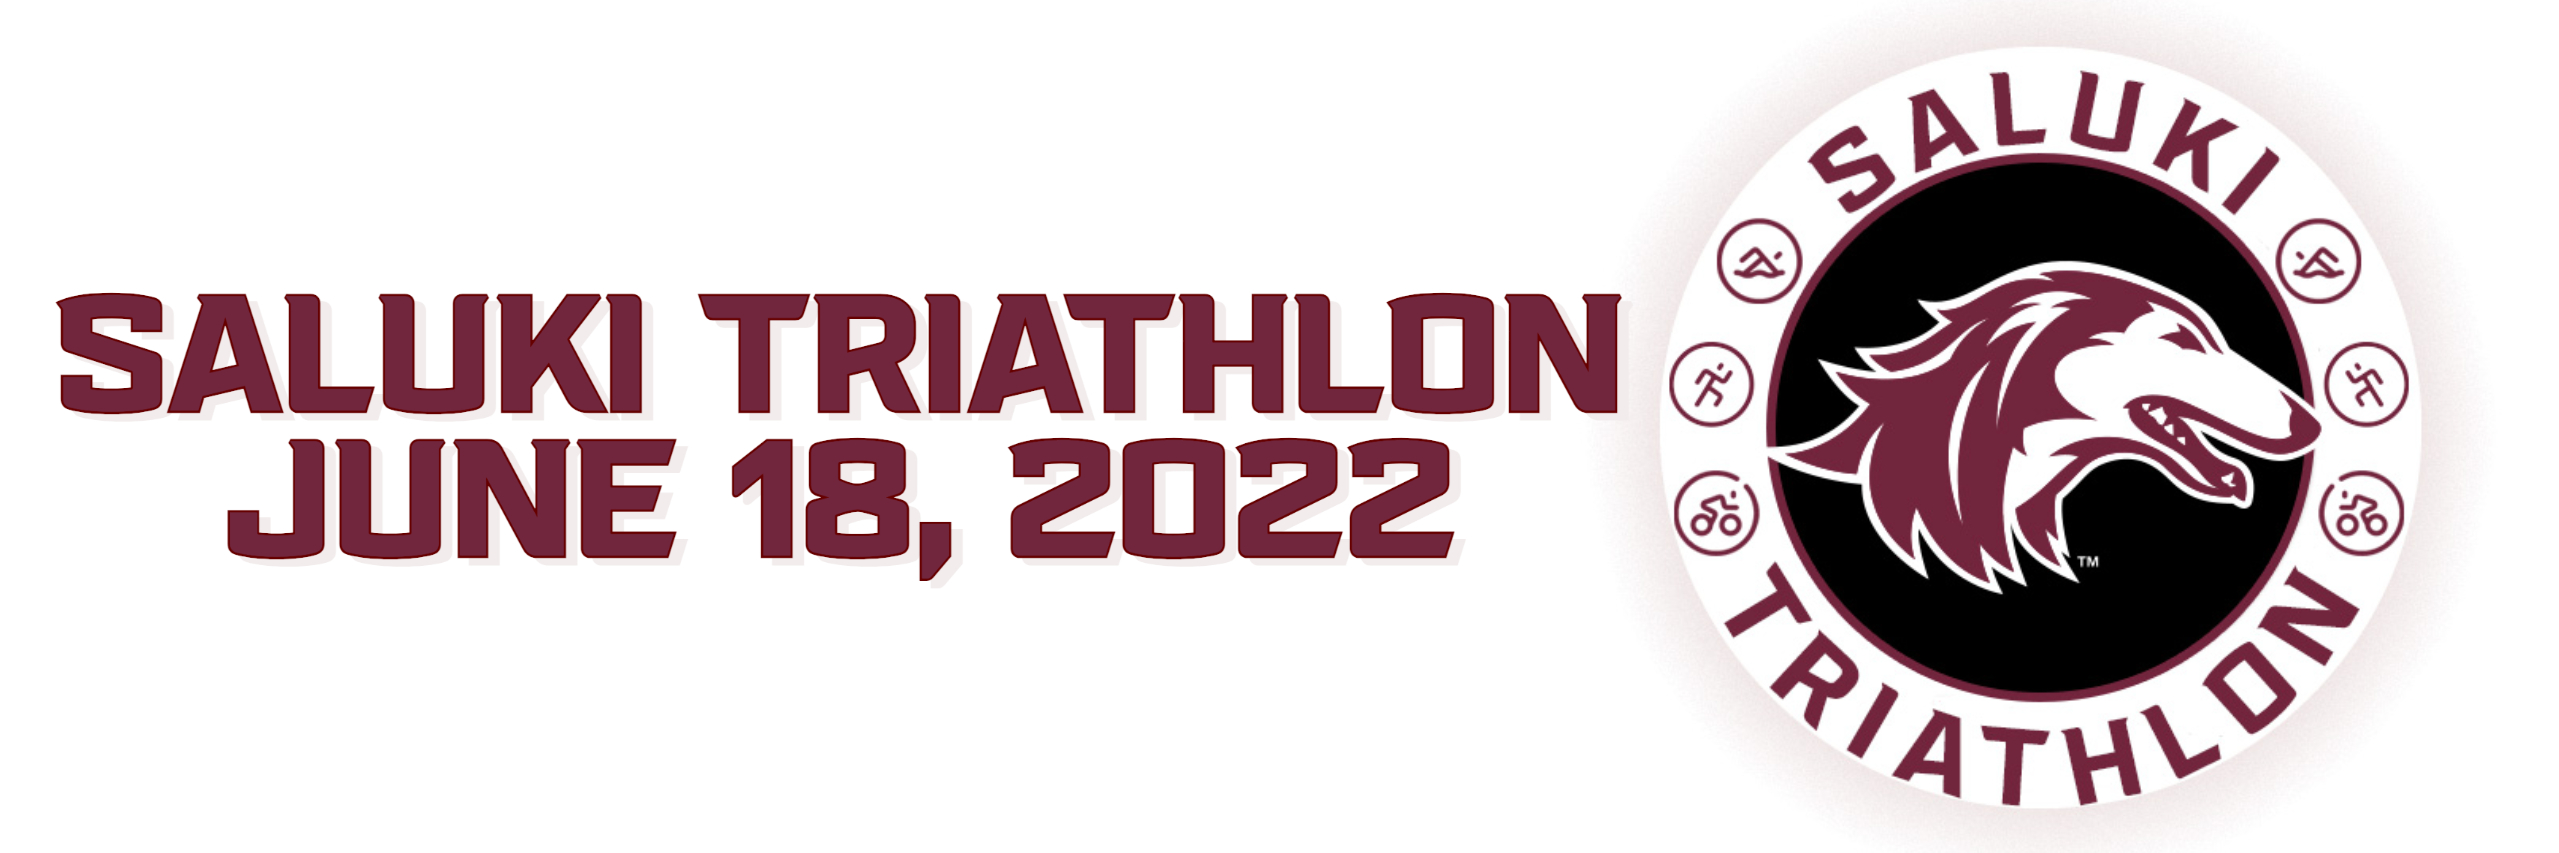 Saluki Triathlon June 18, 2022